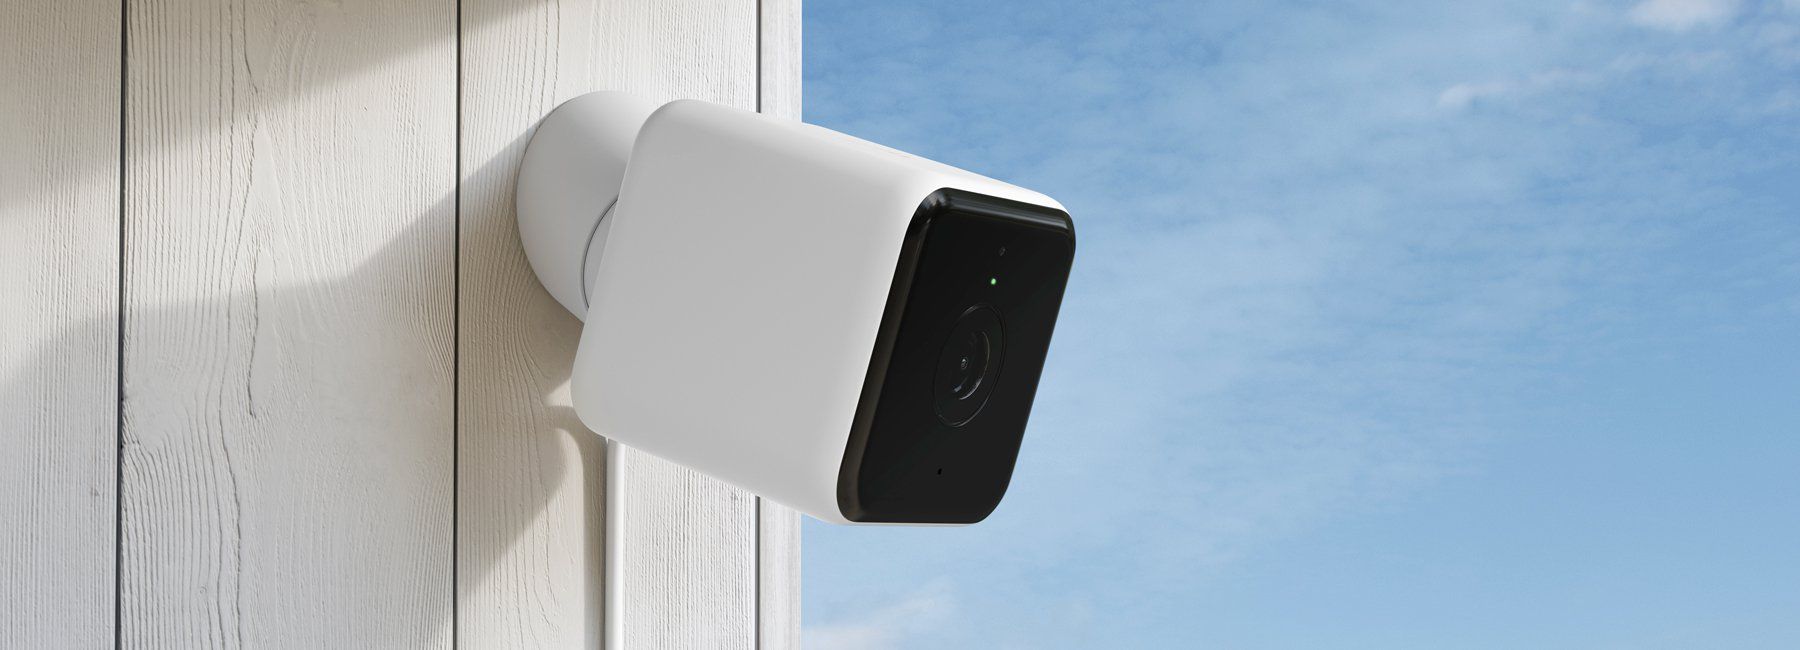 Best Security Cameras For Condos 2020